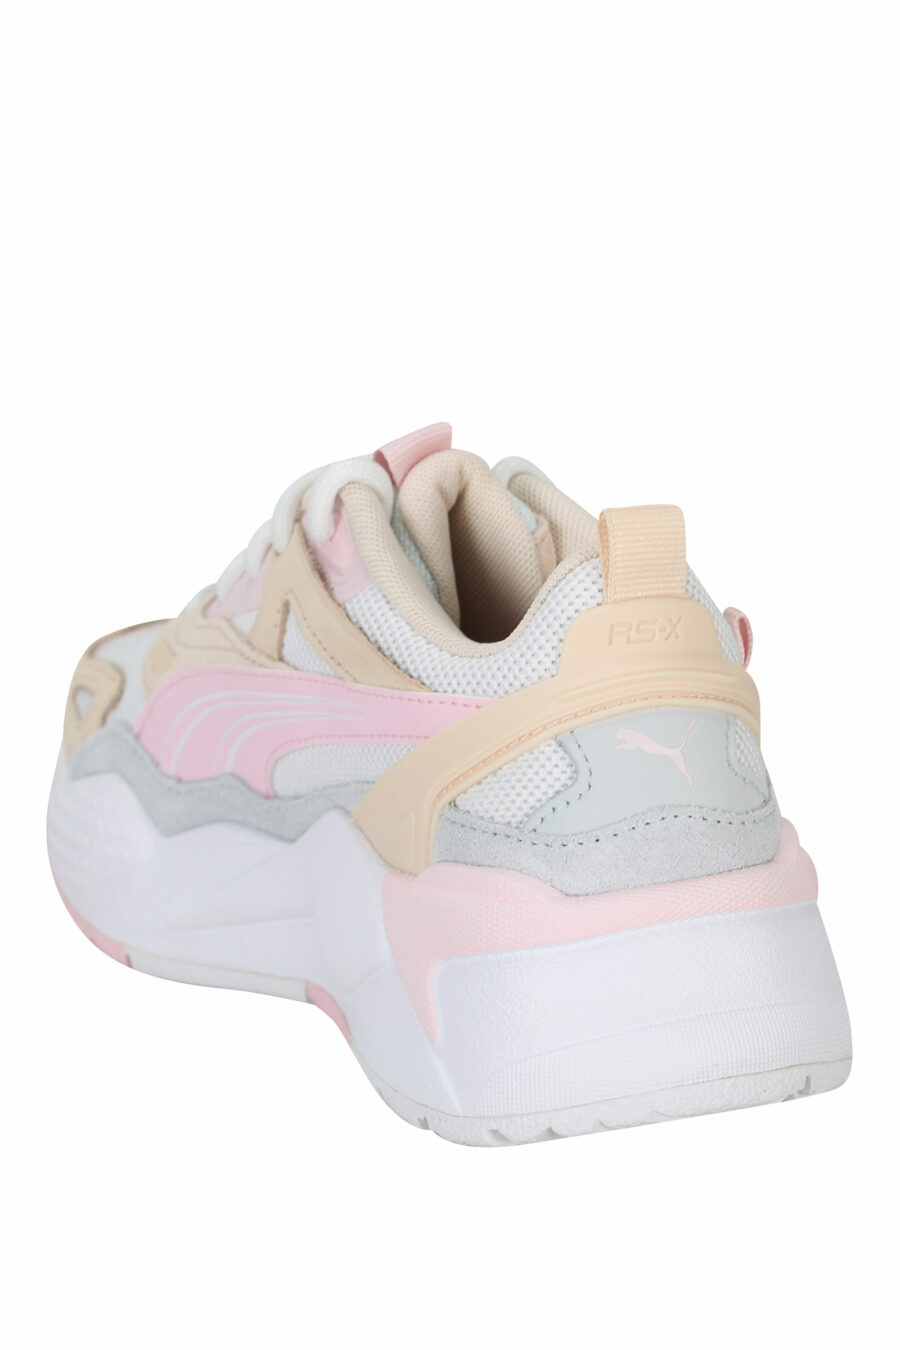 Zapatillas blancas con rosa "RS-X" con logo - 4099685804900 3